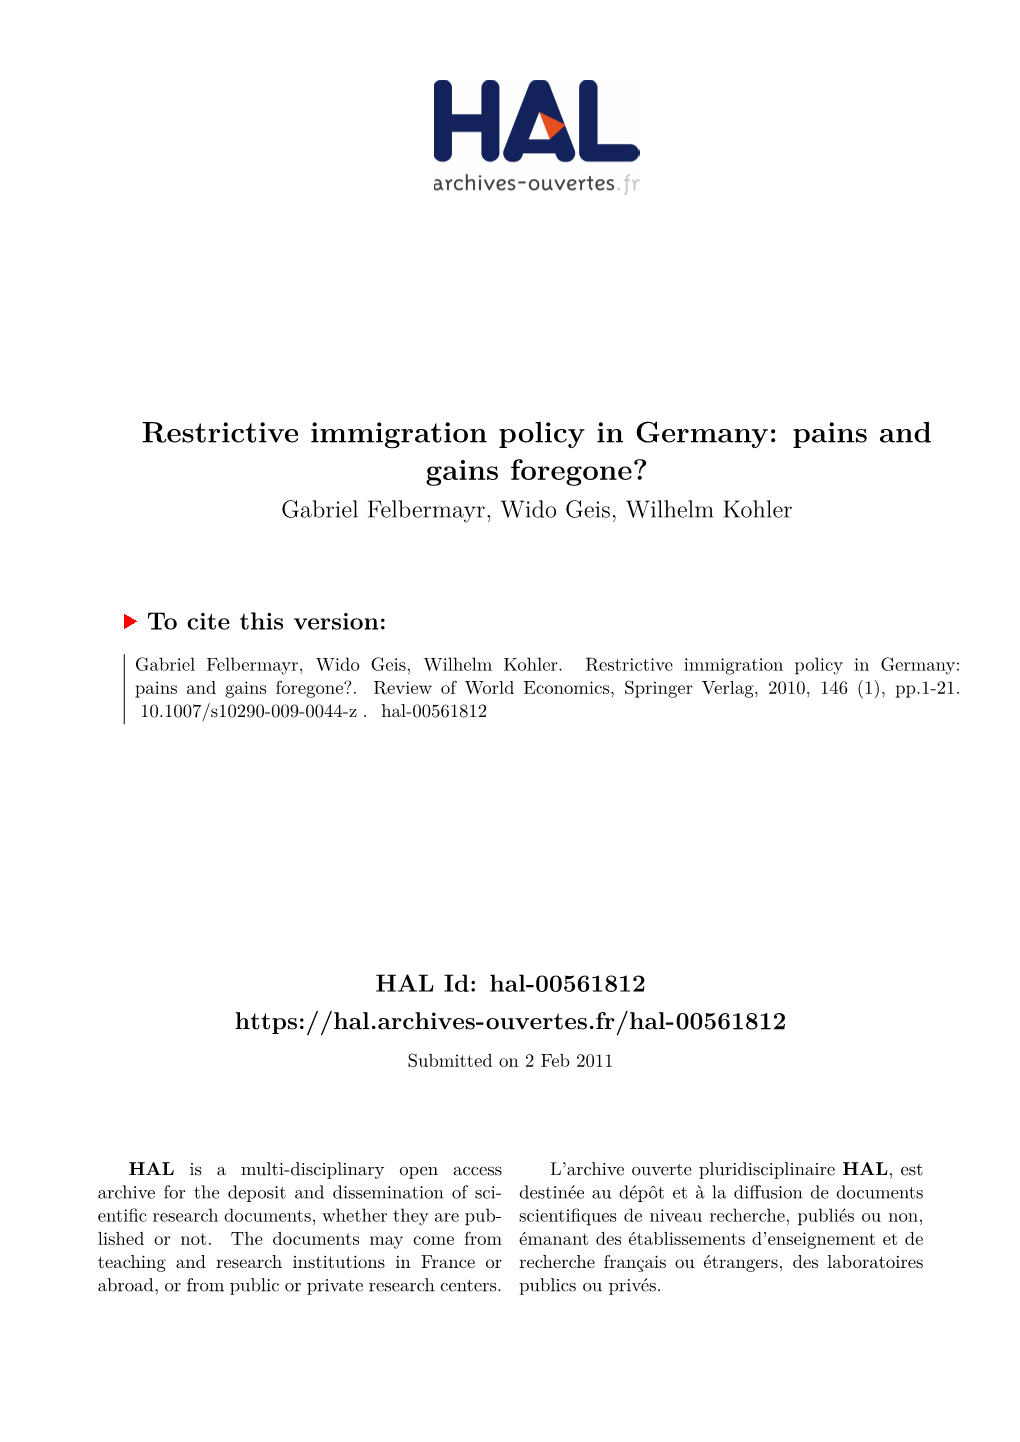 Restrictive Immigration Policy in Germany: Pains and Gains Foregone? Gabriel Felbermayr, Wido Geis, Wilhelm Kohler